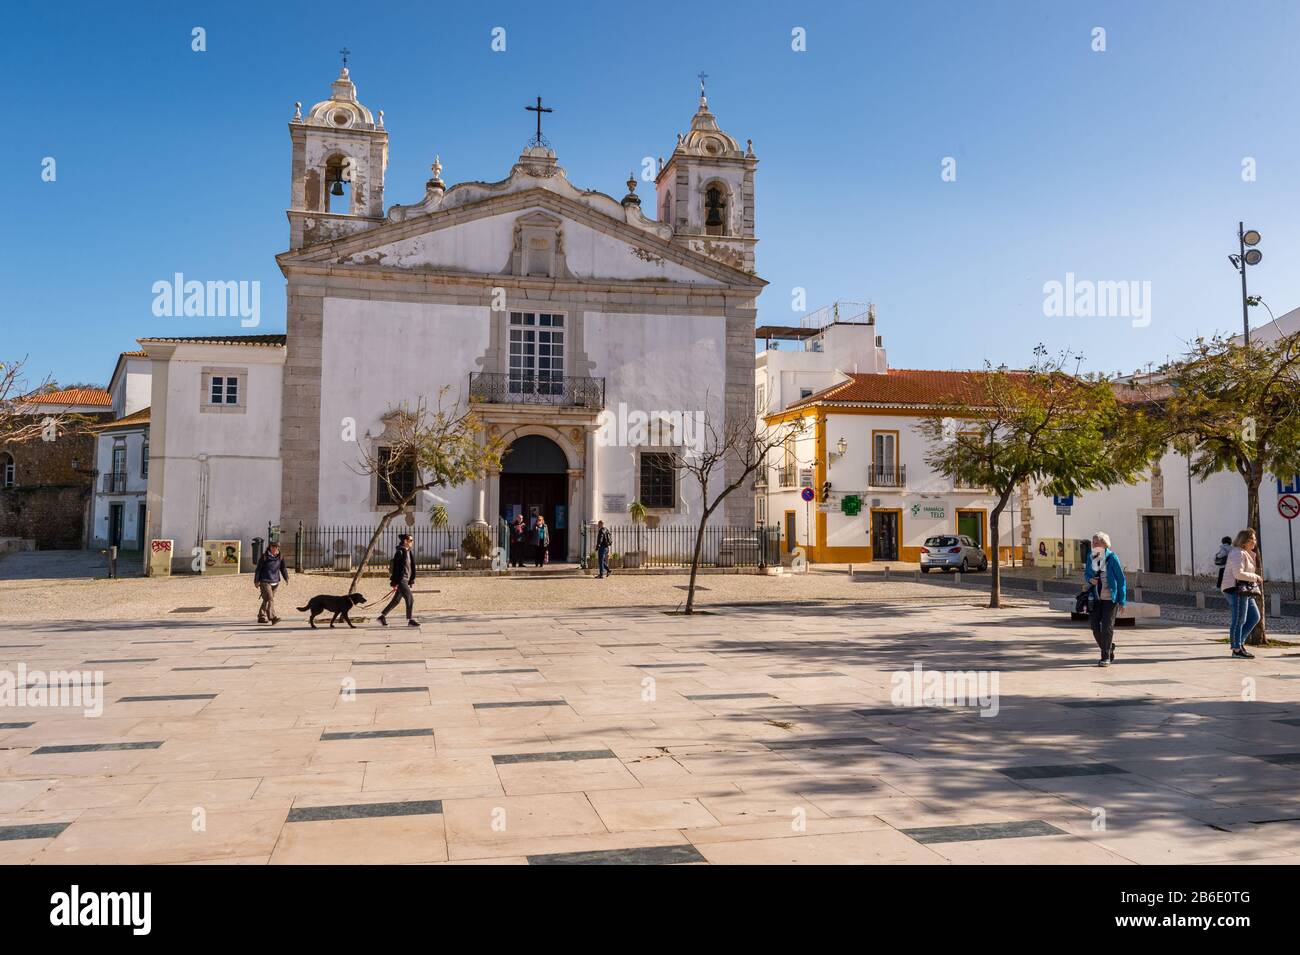 Lagos, Portugal - 6 March 2020: Santa Maria Church in Lagos, Portugal Stock Photo